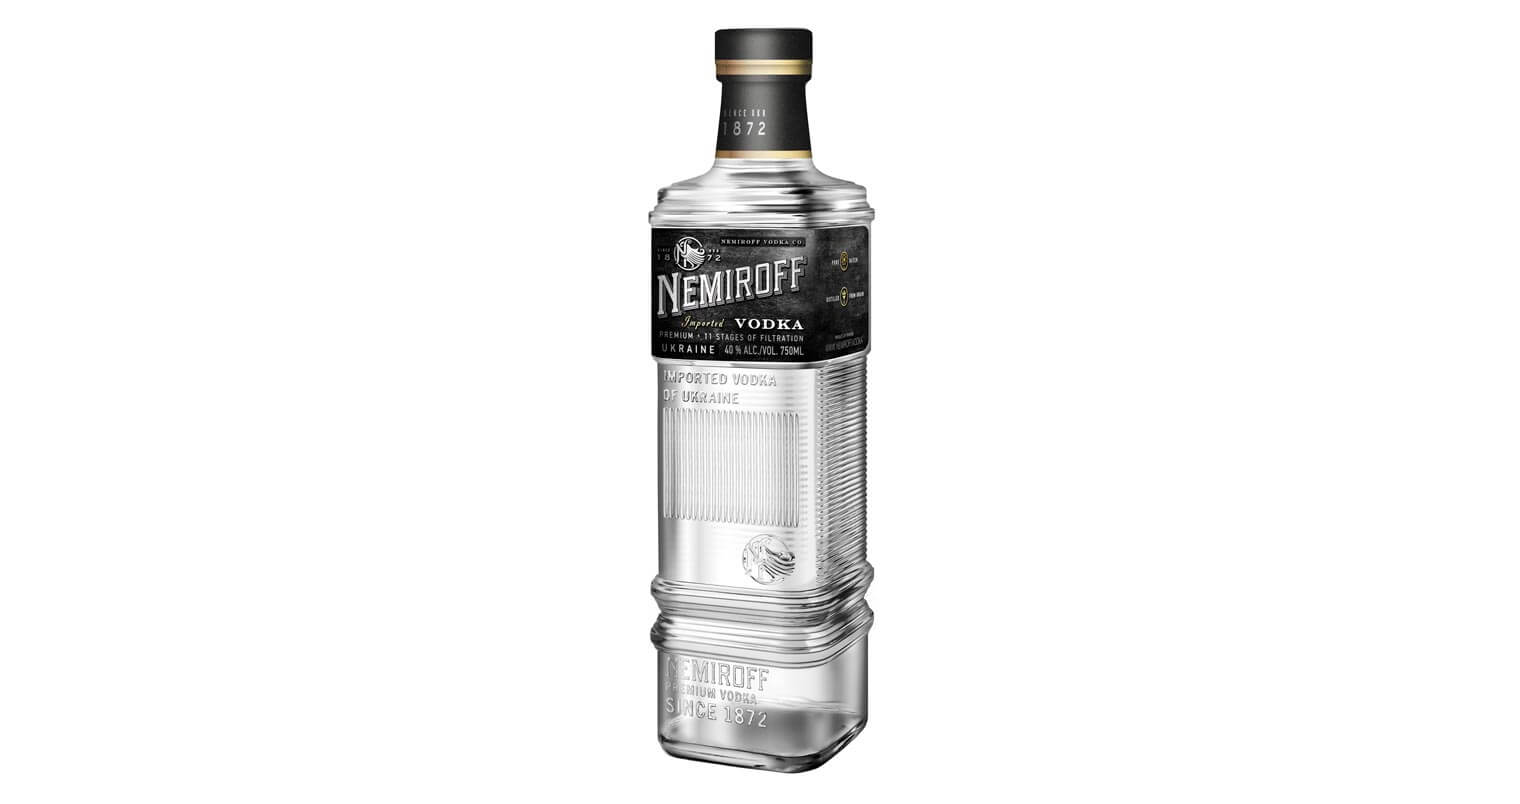 Nemiroff Vodka bottle on white, featured image